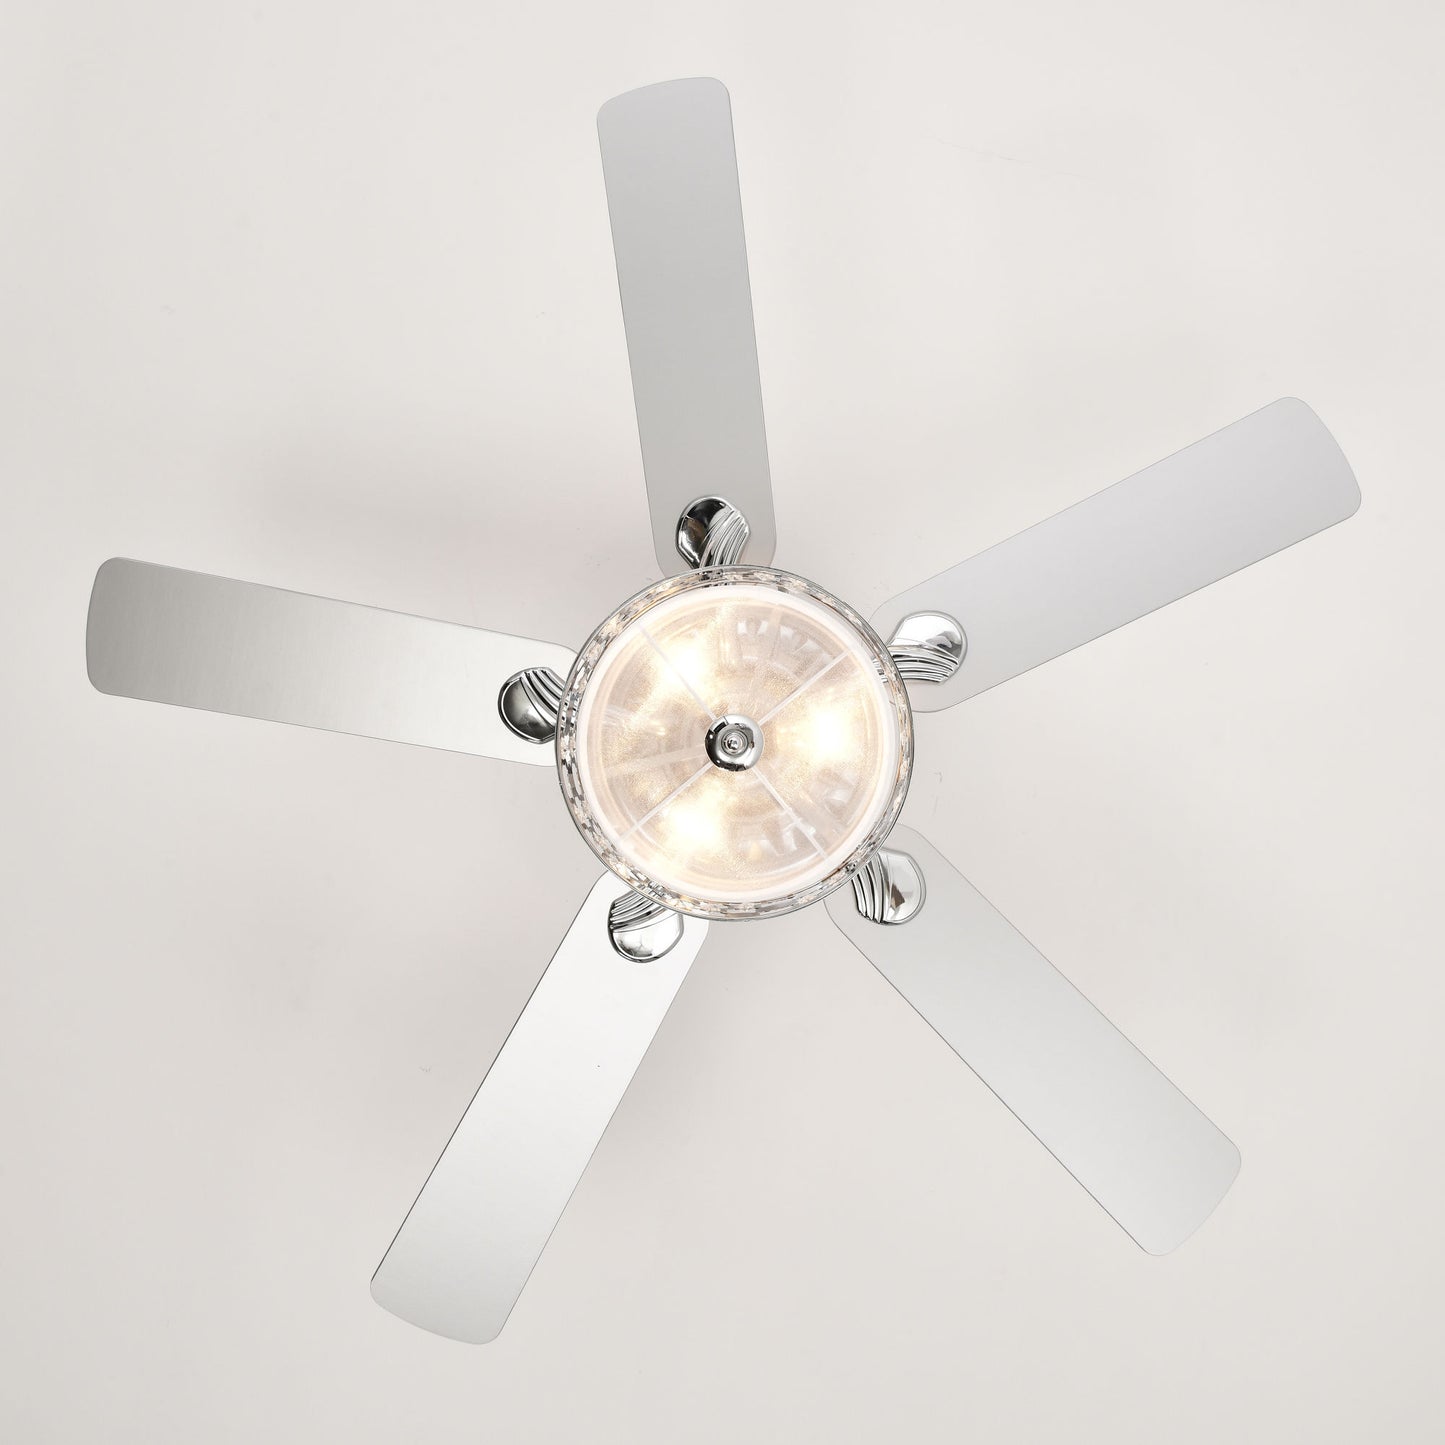 52" Elegant Ceiling Fan Light with Remote, Crystal Chandelier Fan 5 Chrome Reversible Wood Blades for Dinning Room Bedroom Living Room